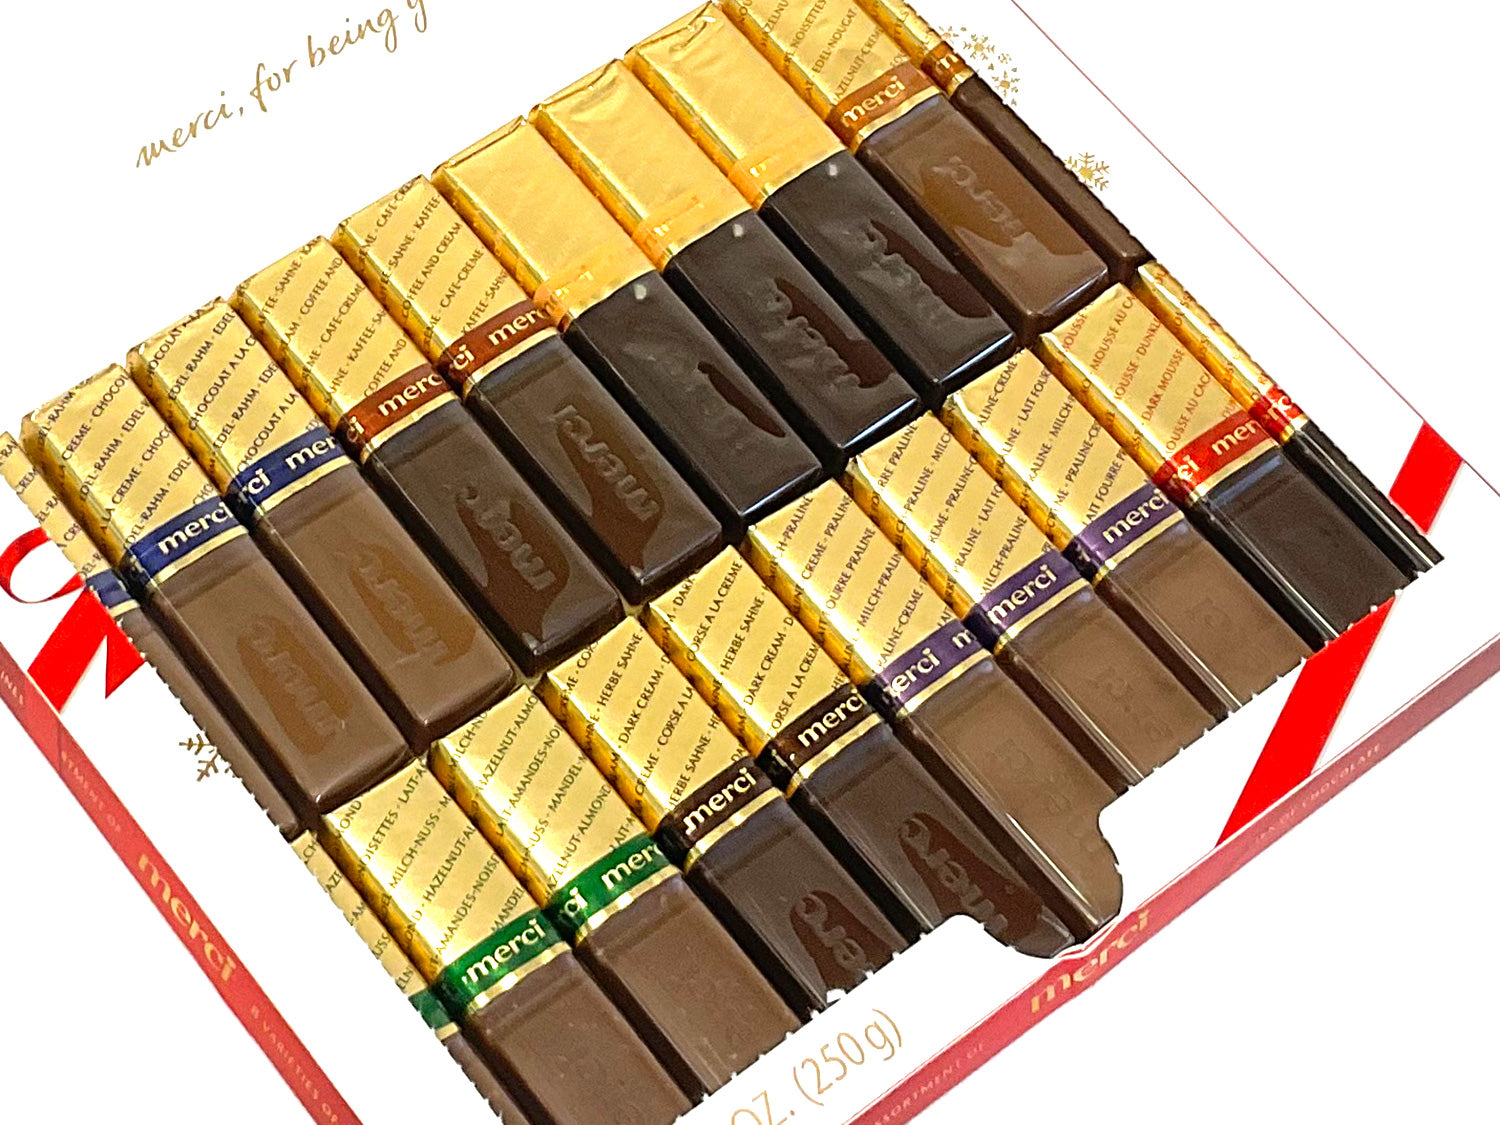 Merci Chocolates Gift Box - 8.8 oz - open